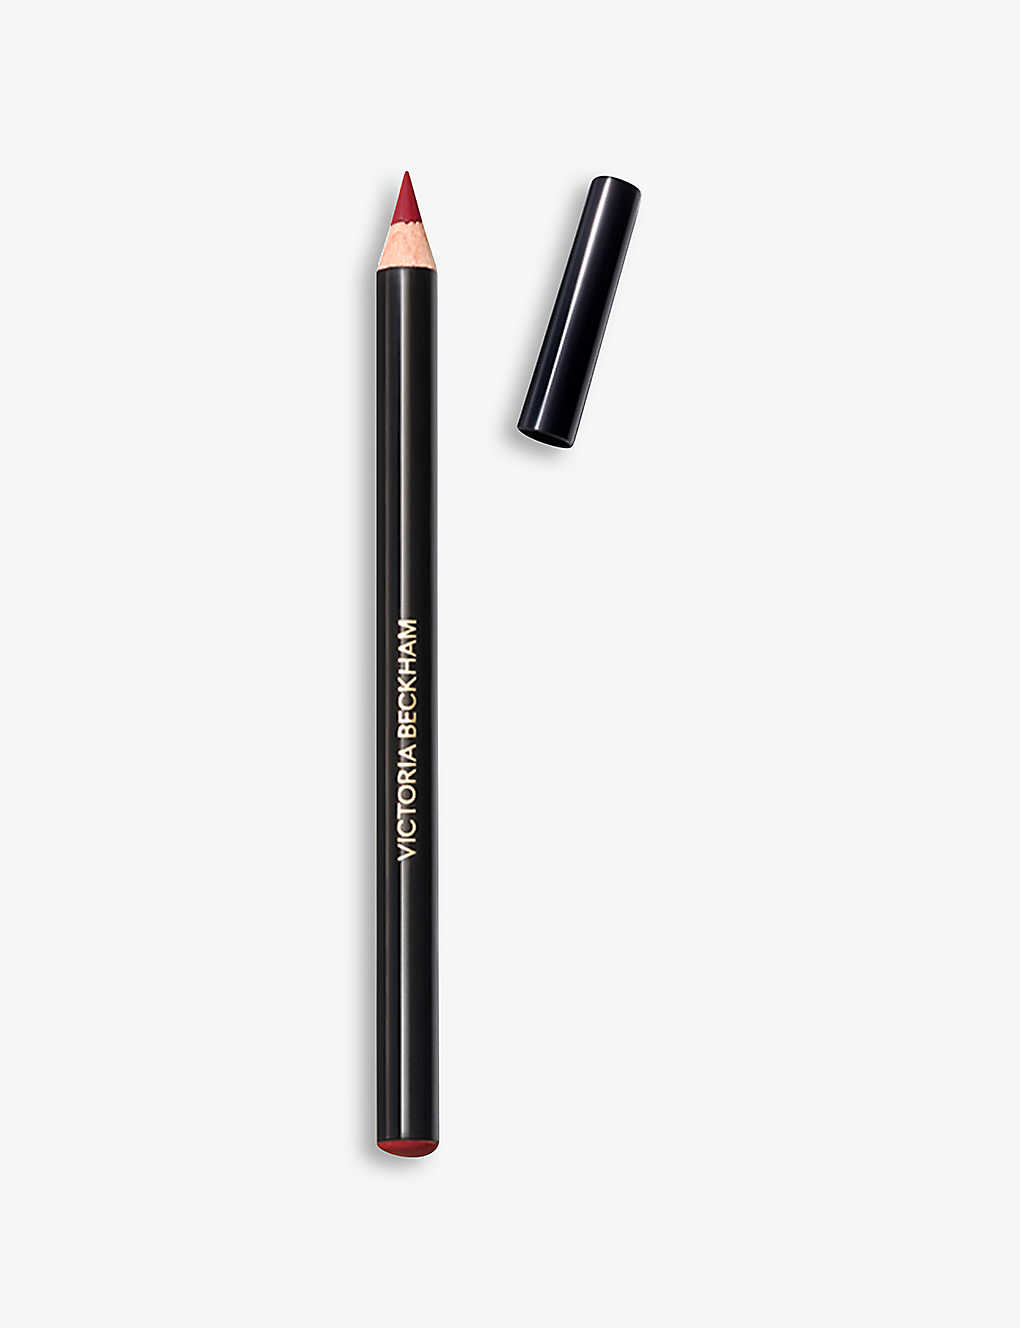 Victoria Beckham Beauty Red Lip Definer Lip Pencil 1.1g